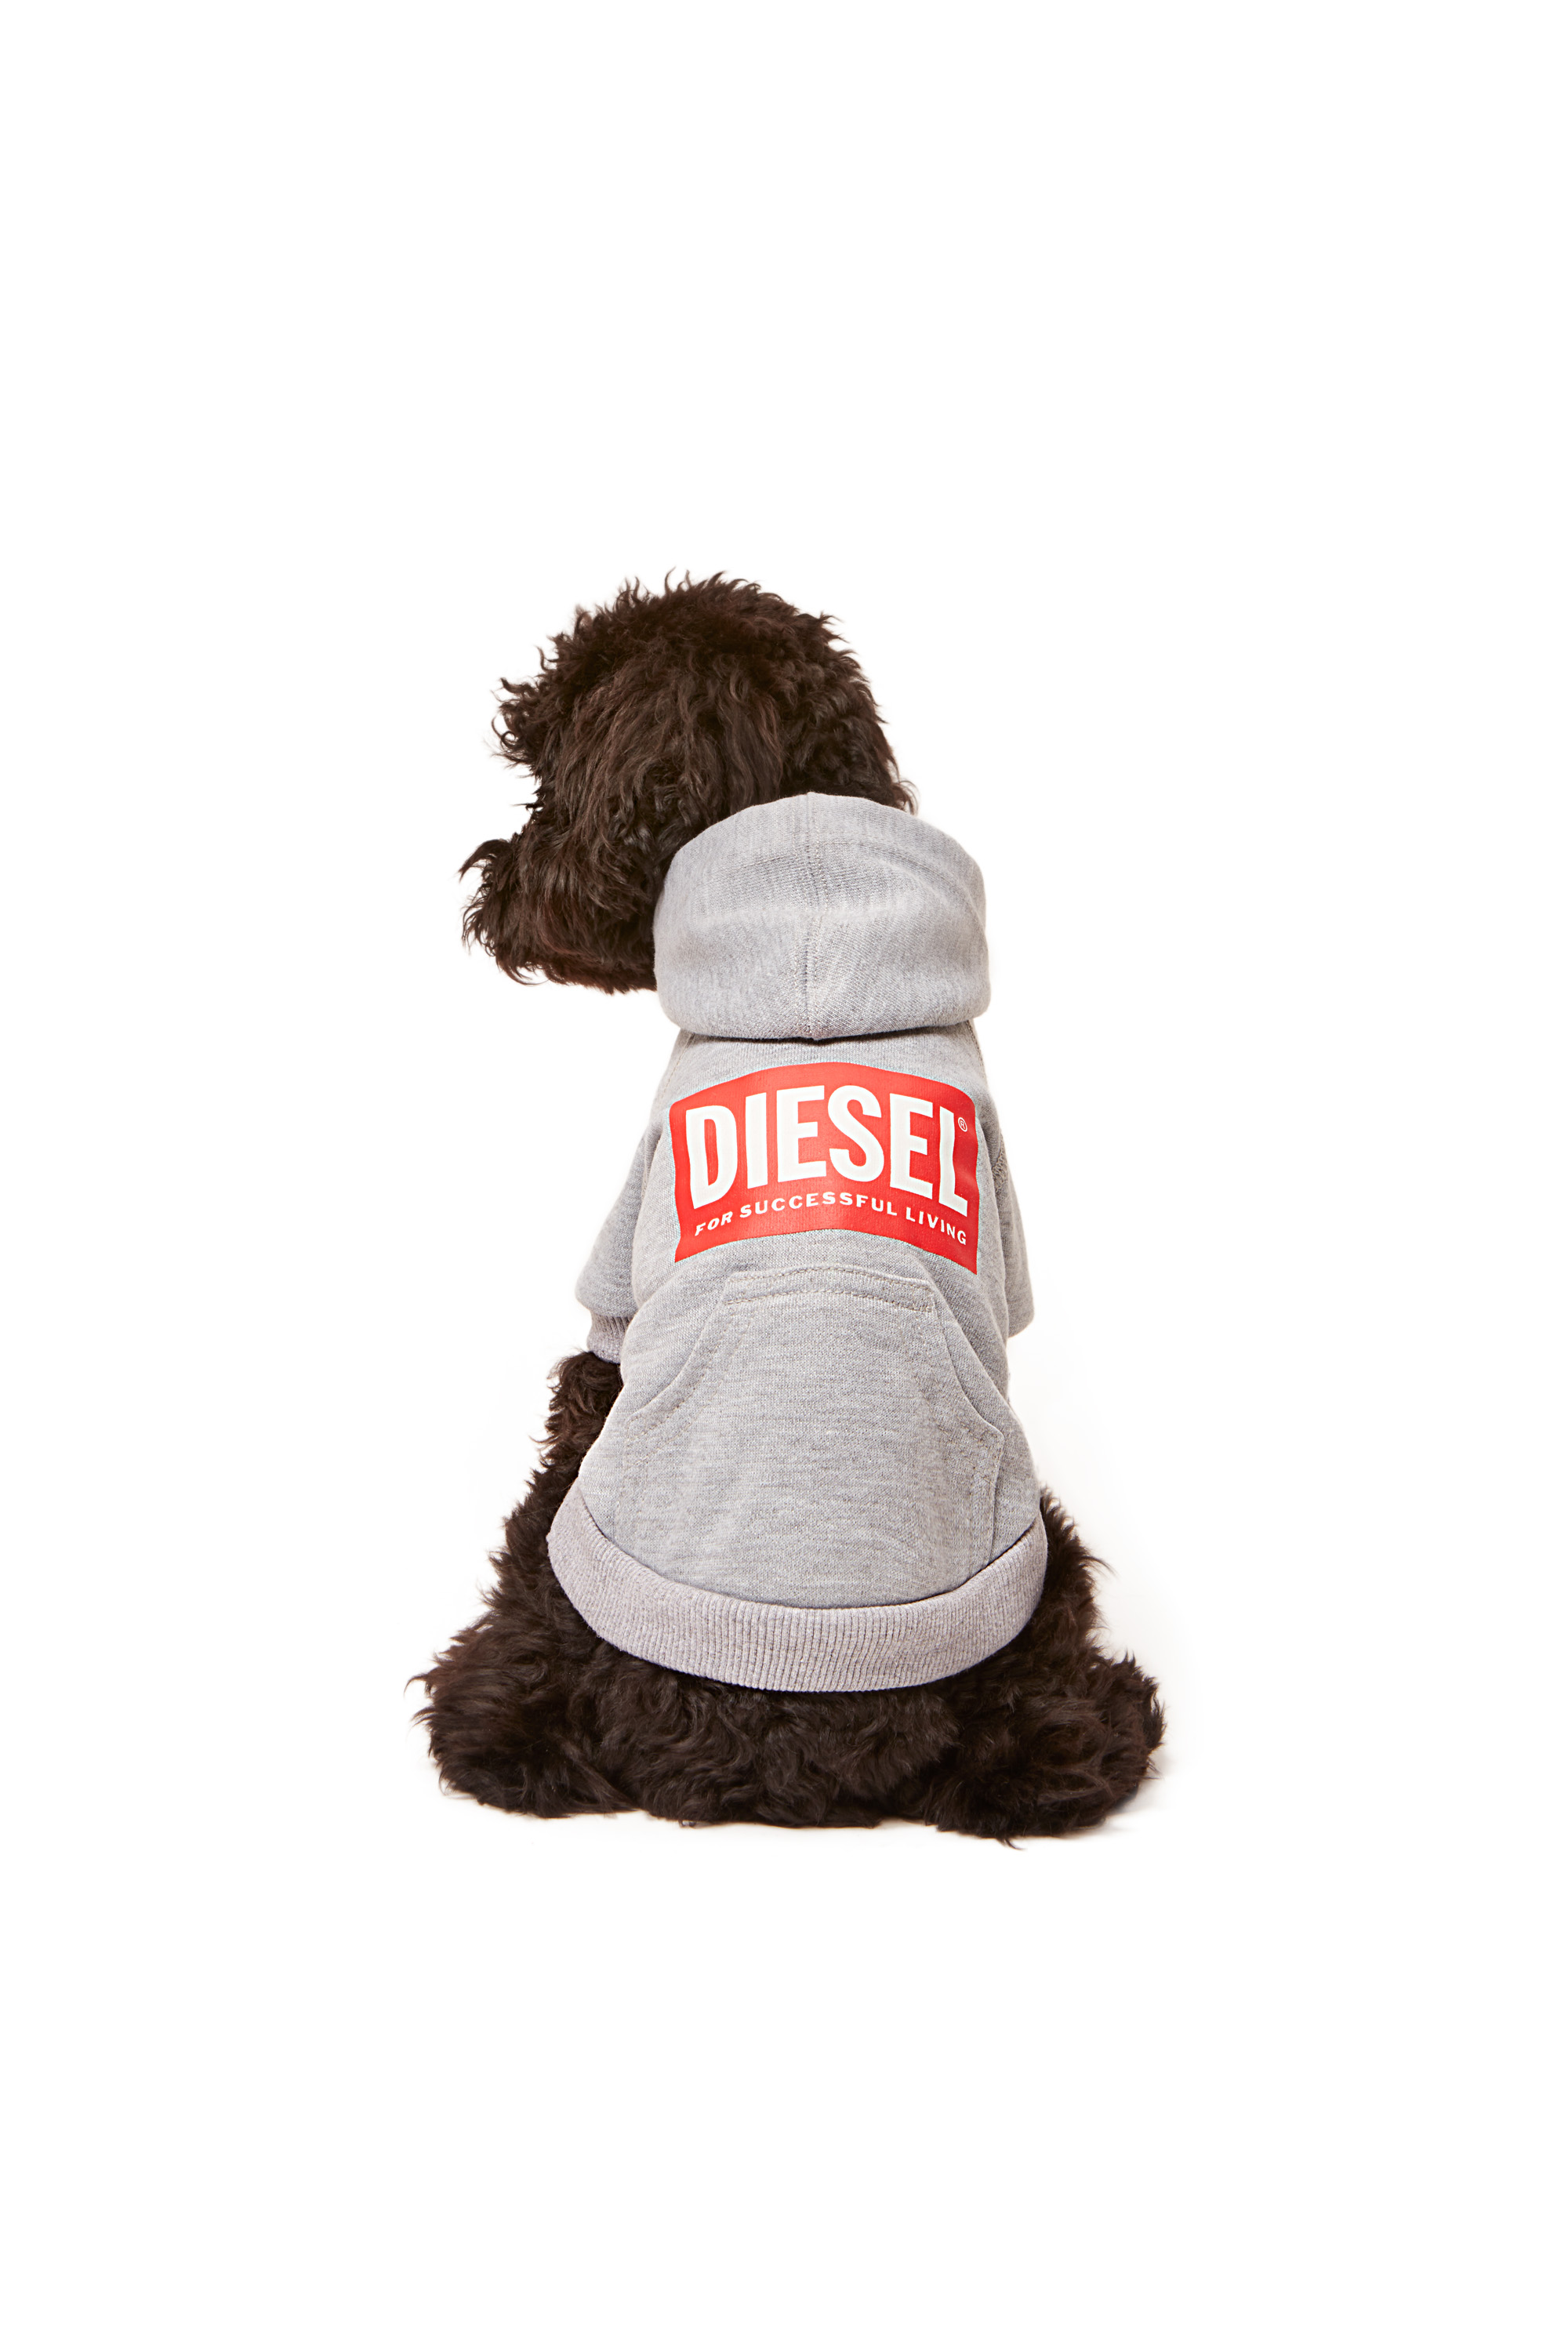 Diesel - PET-SCOTTO, Grey - Image 4